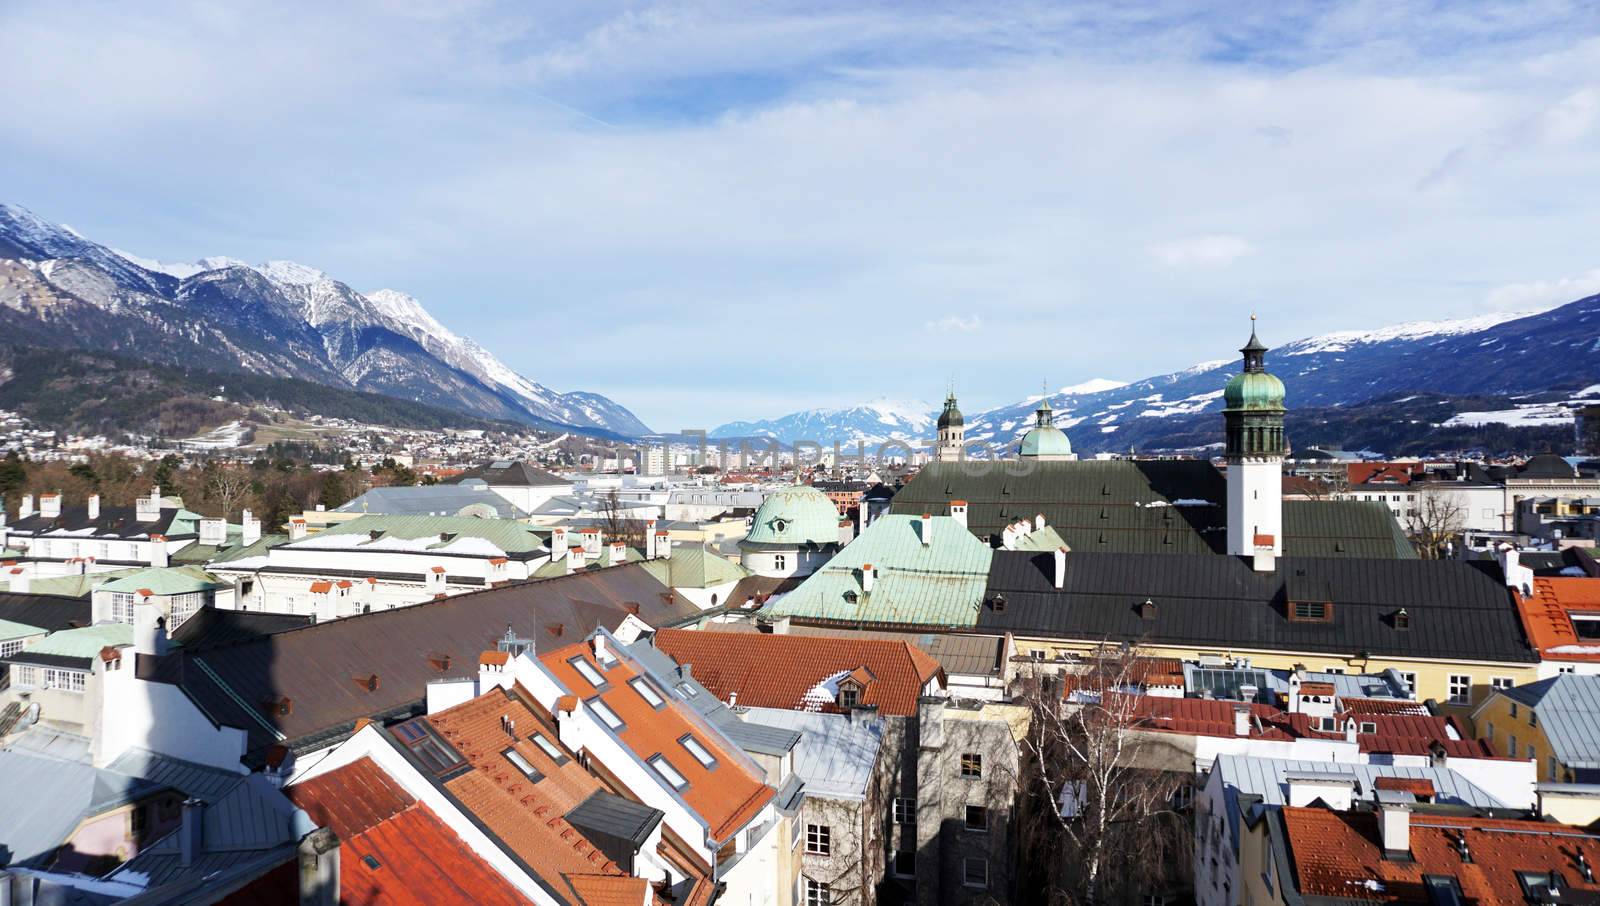 Viewpoints in Innsbruck by polarbearstudio